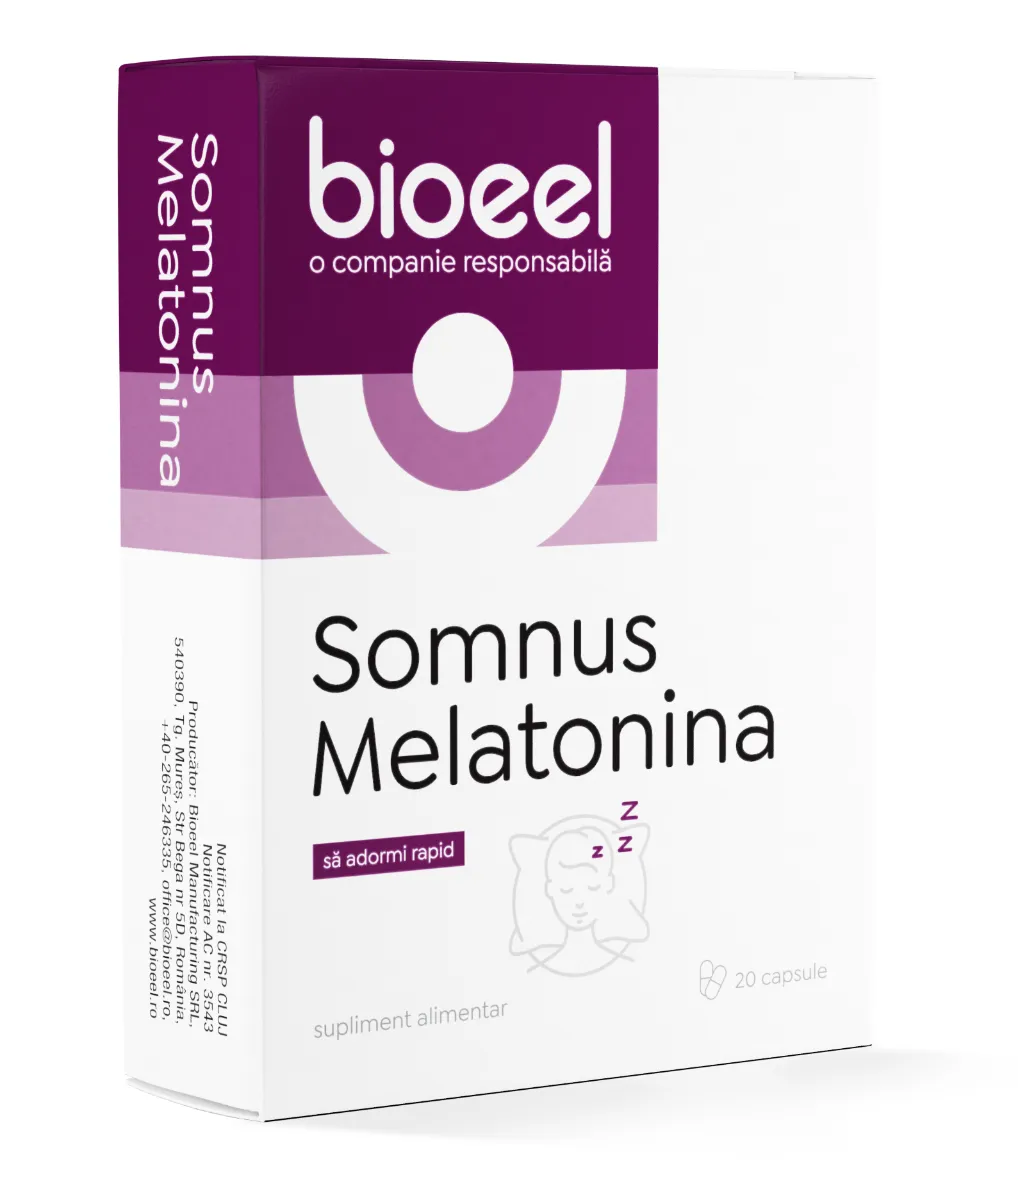 Somnus Melatonina, 20 capsule, Bioeel 